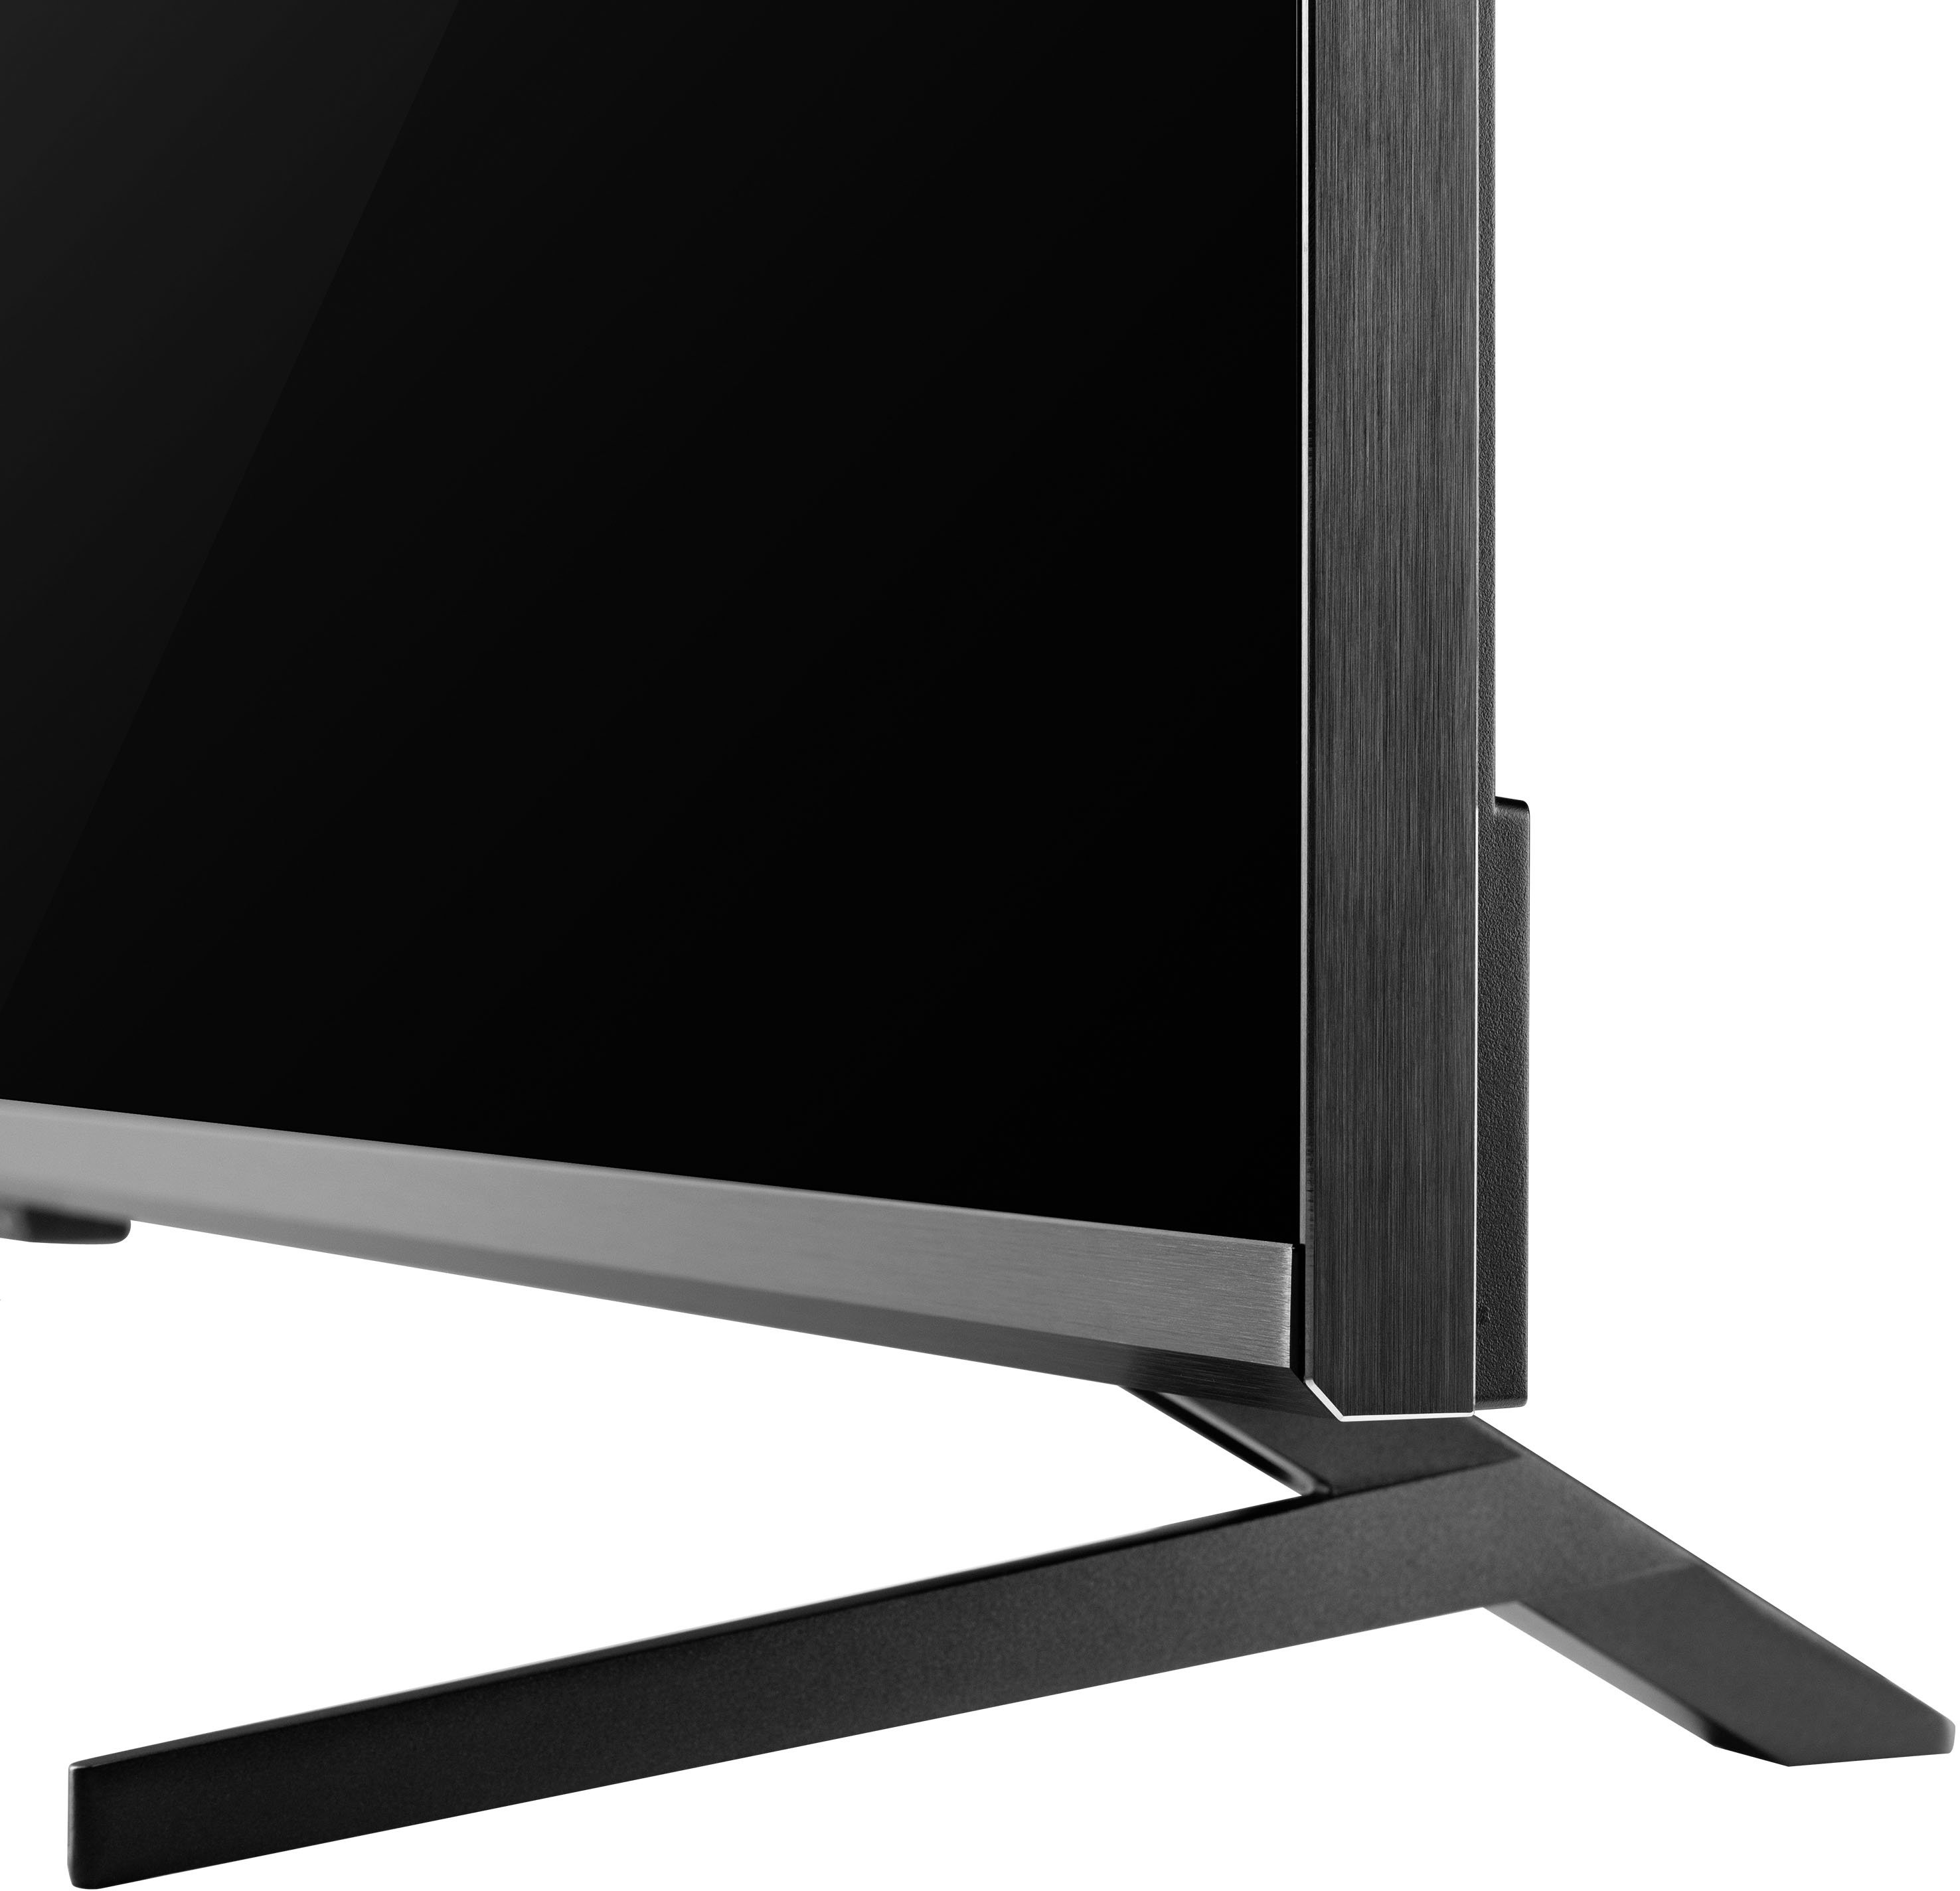 TV QLED UHD 75C644 – TCL – 75 (190cm) - 4K SMART TV 